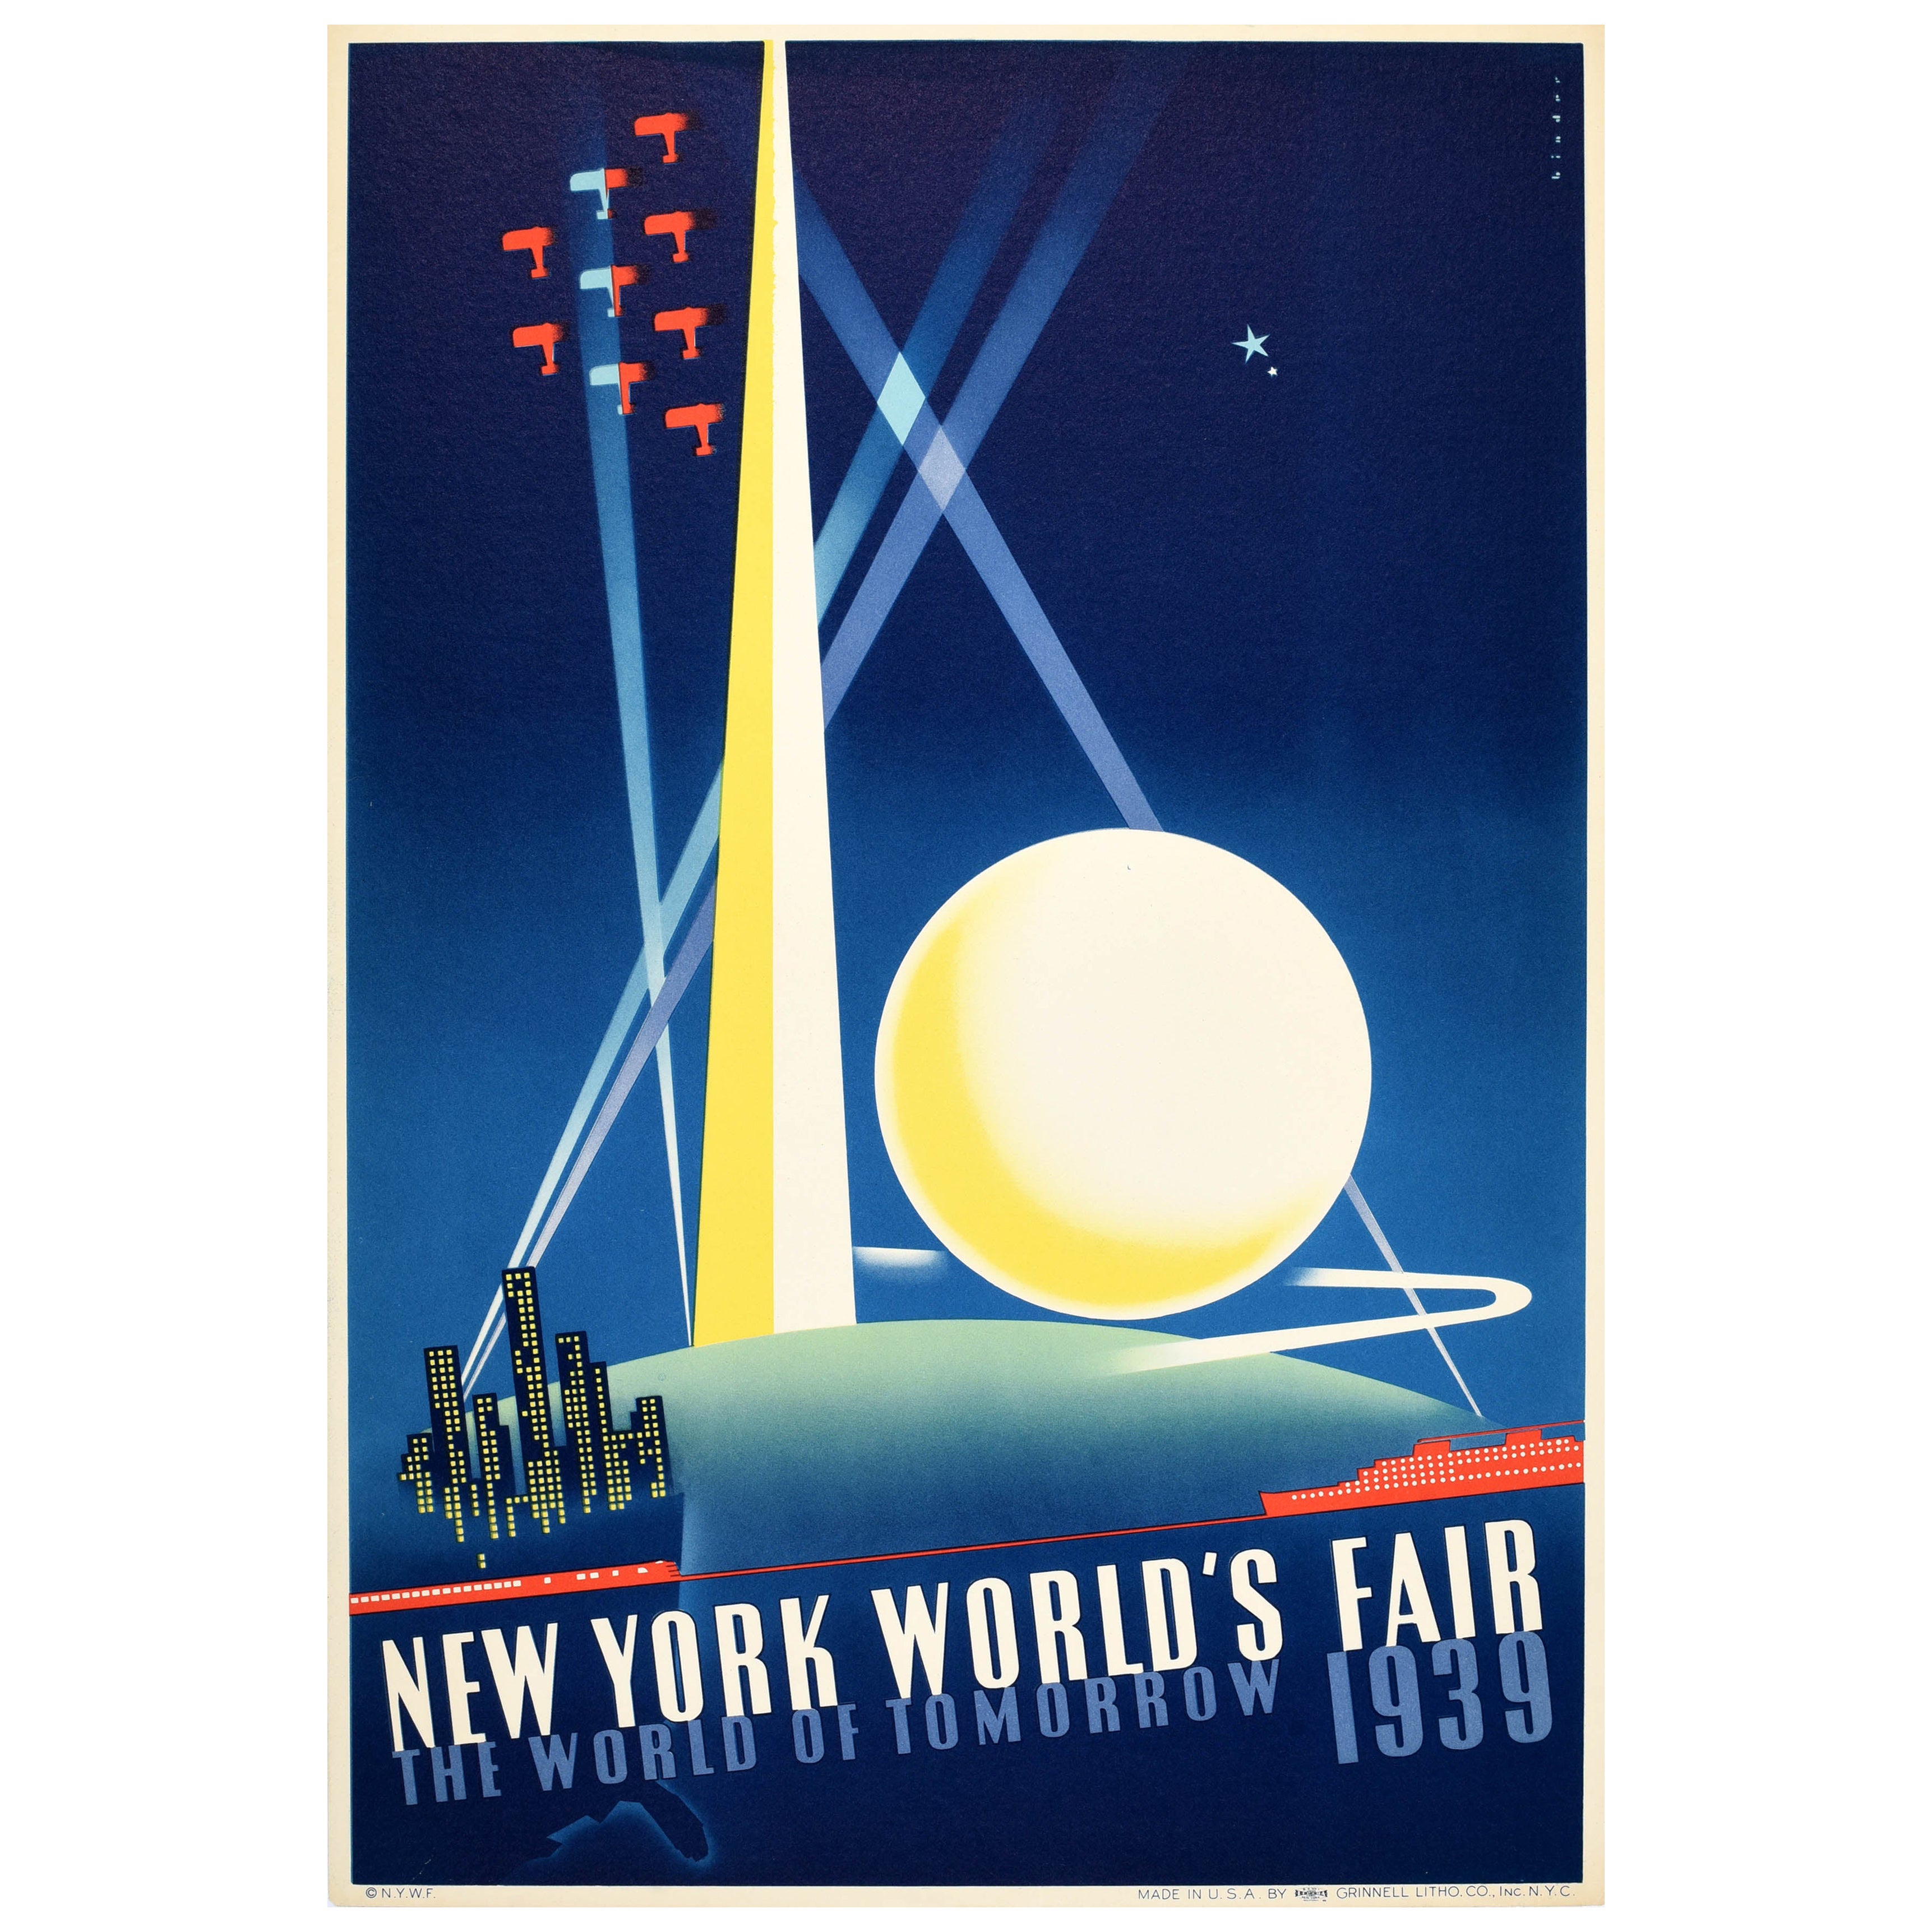 Original Vintage Travel Advertising Poster New York Worlds Fair Binder Art Deco For Sale